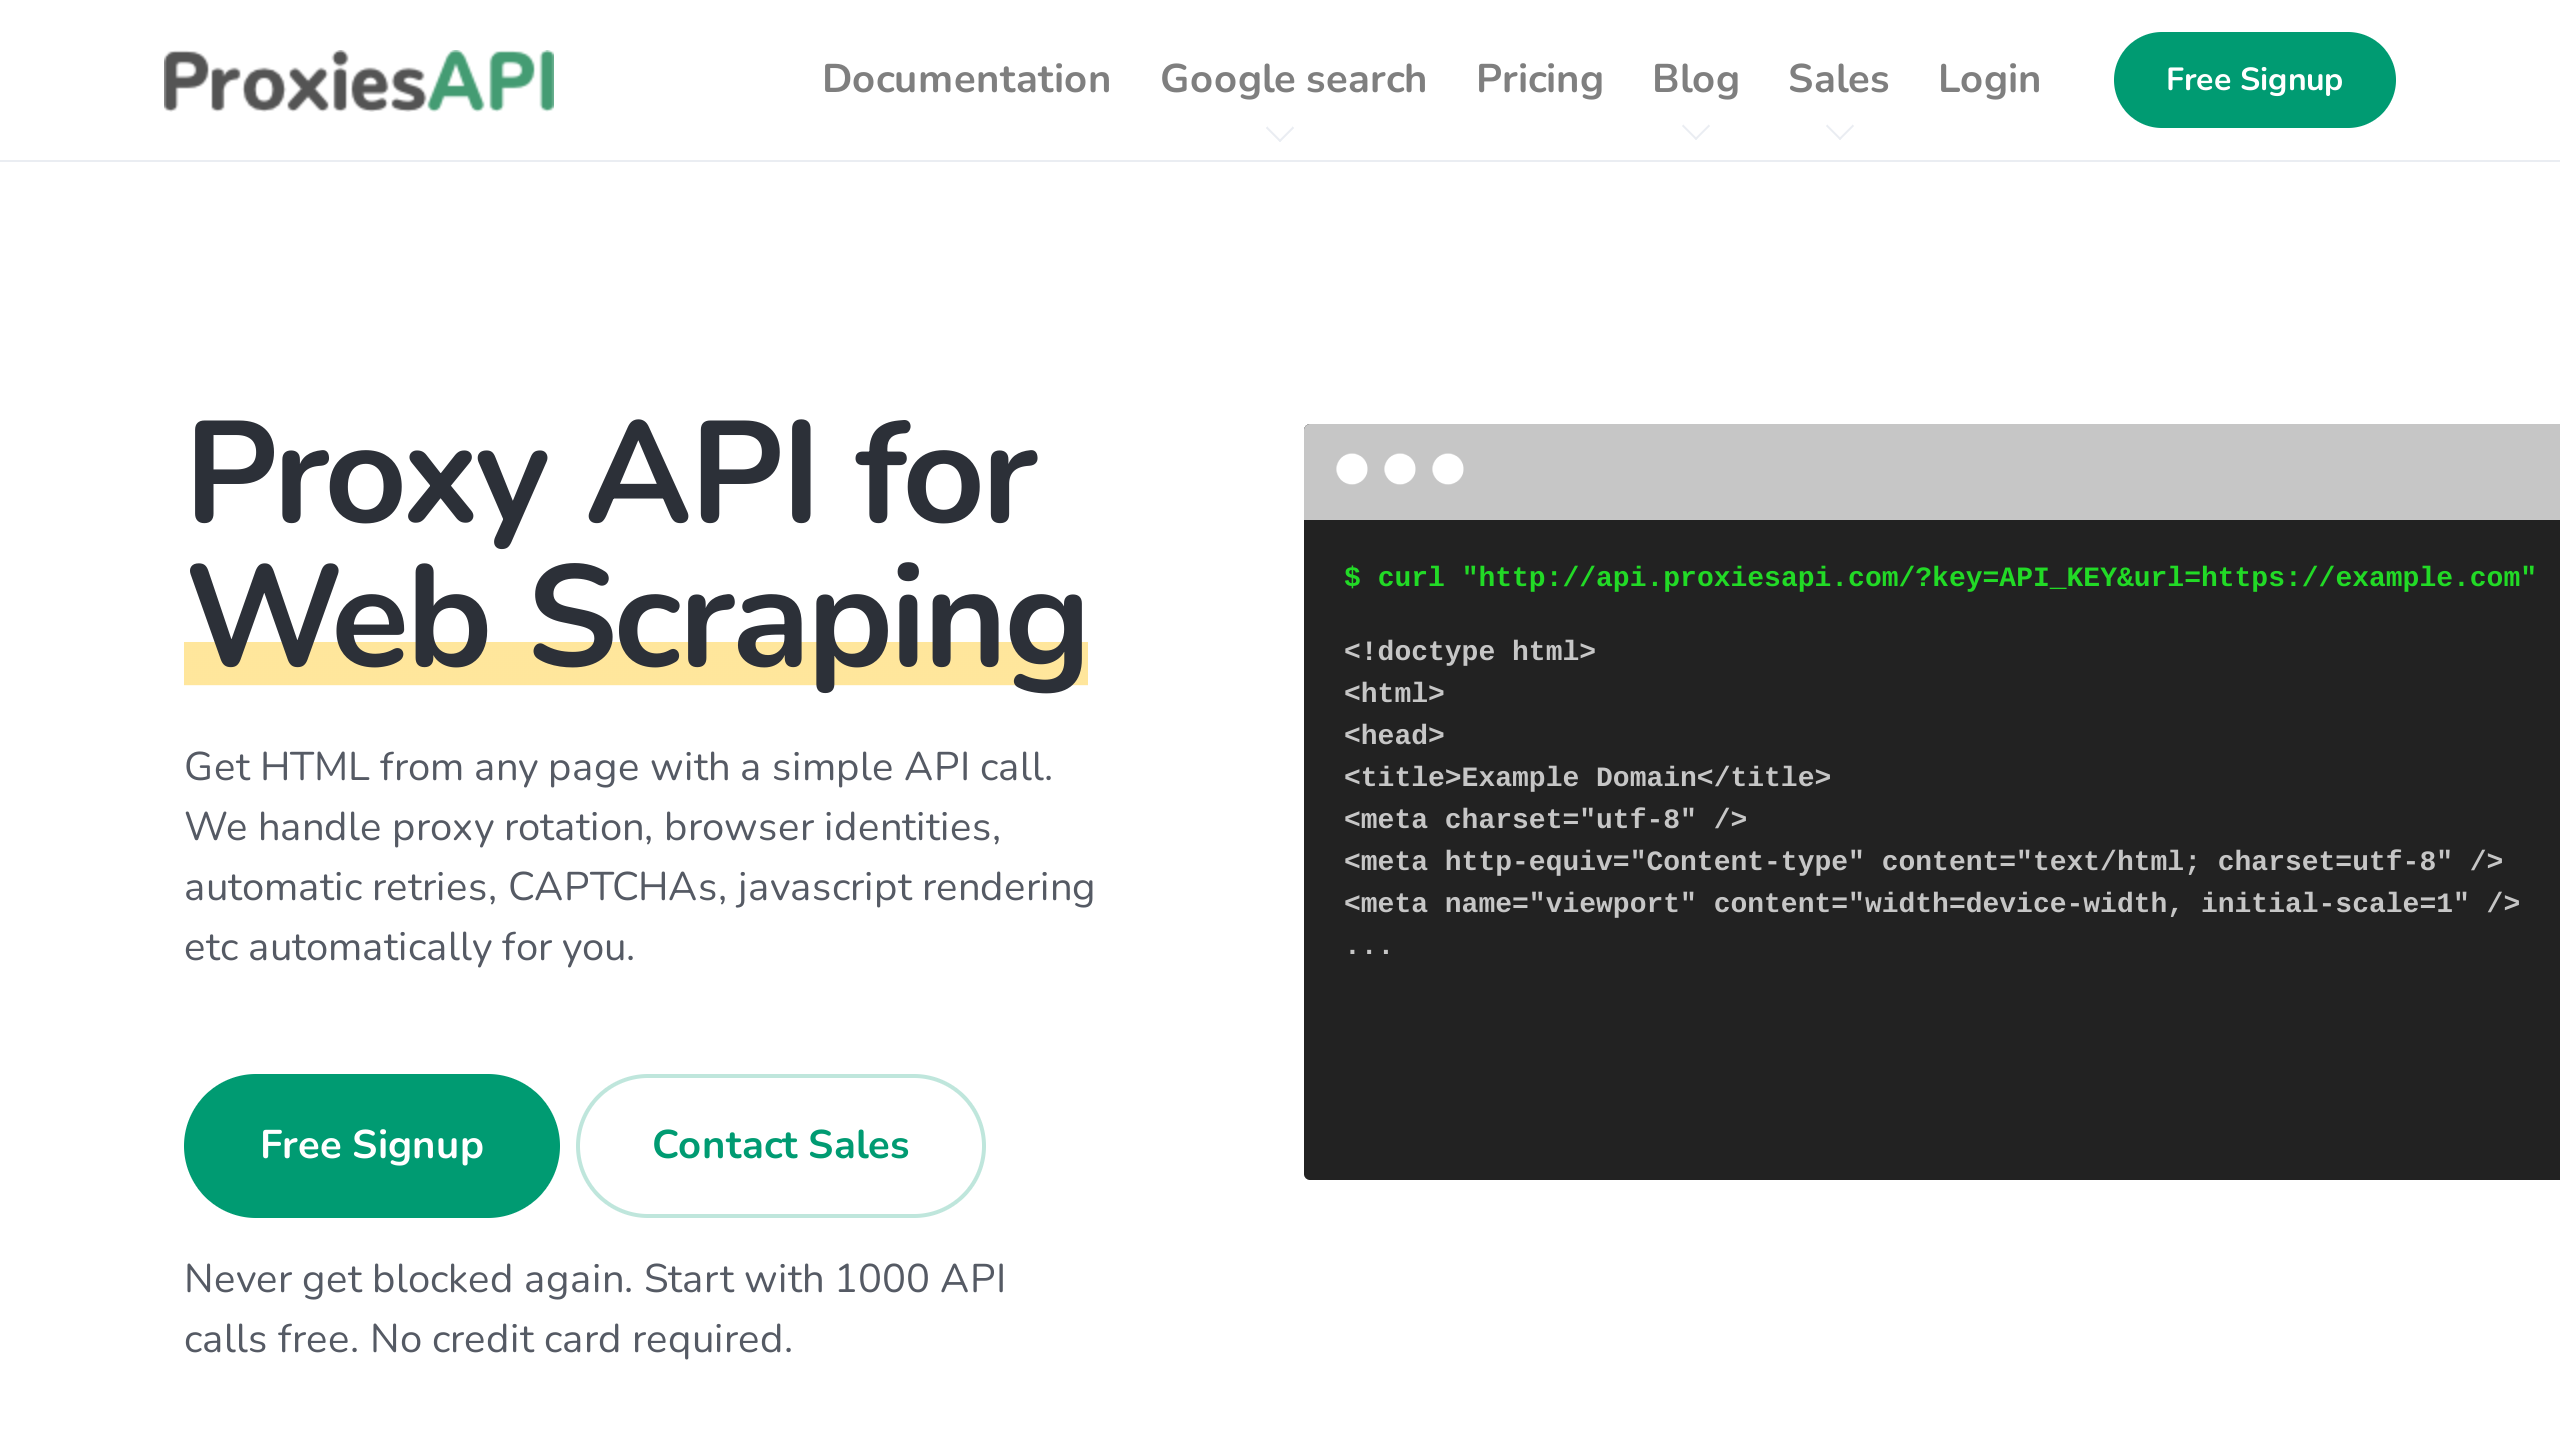 Proxies API's website screenshot